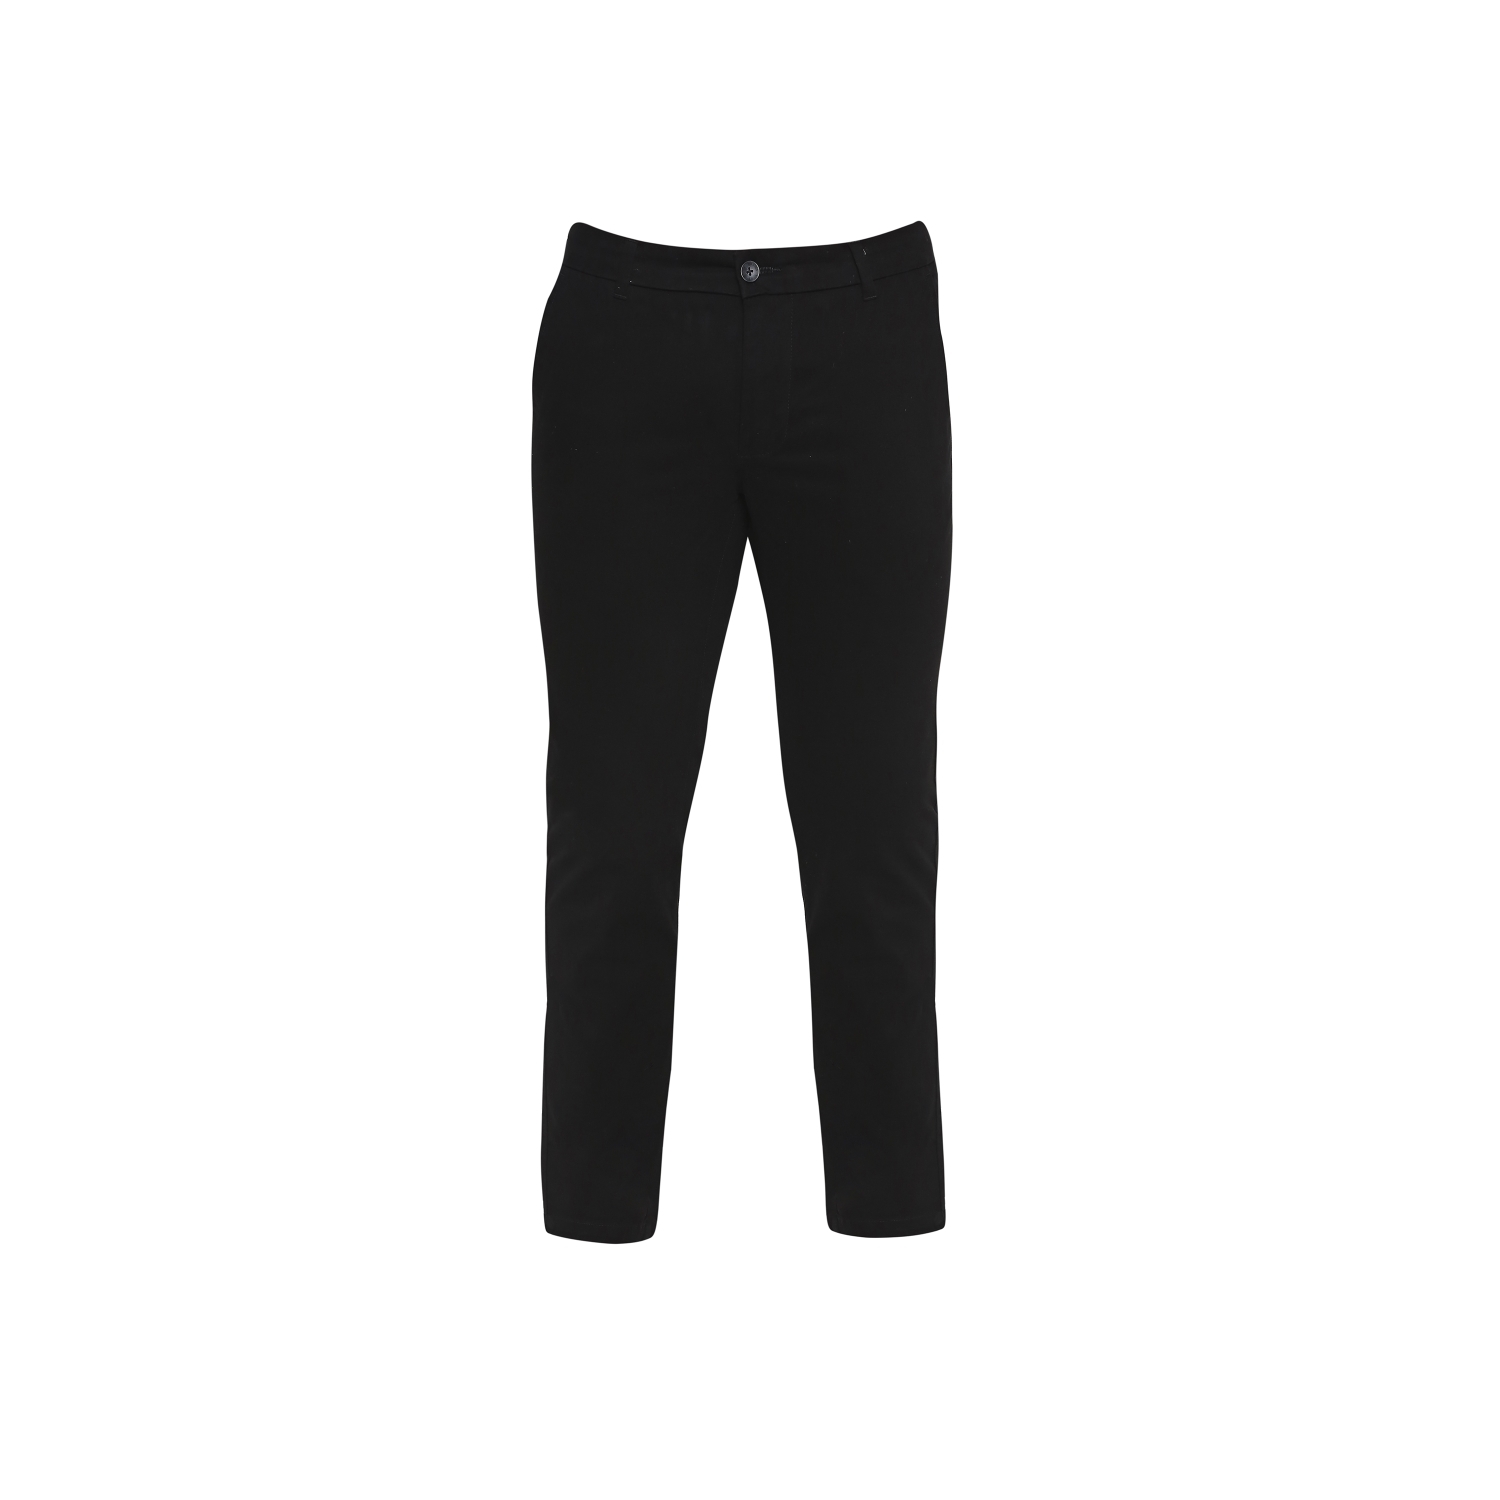 Basics | Men's Black Cotton Blend Solid Trouser 5